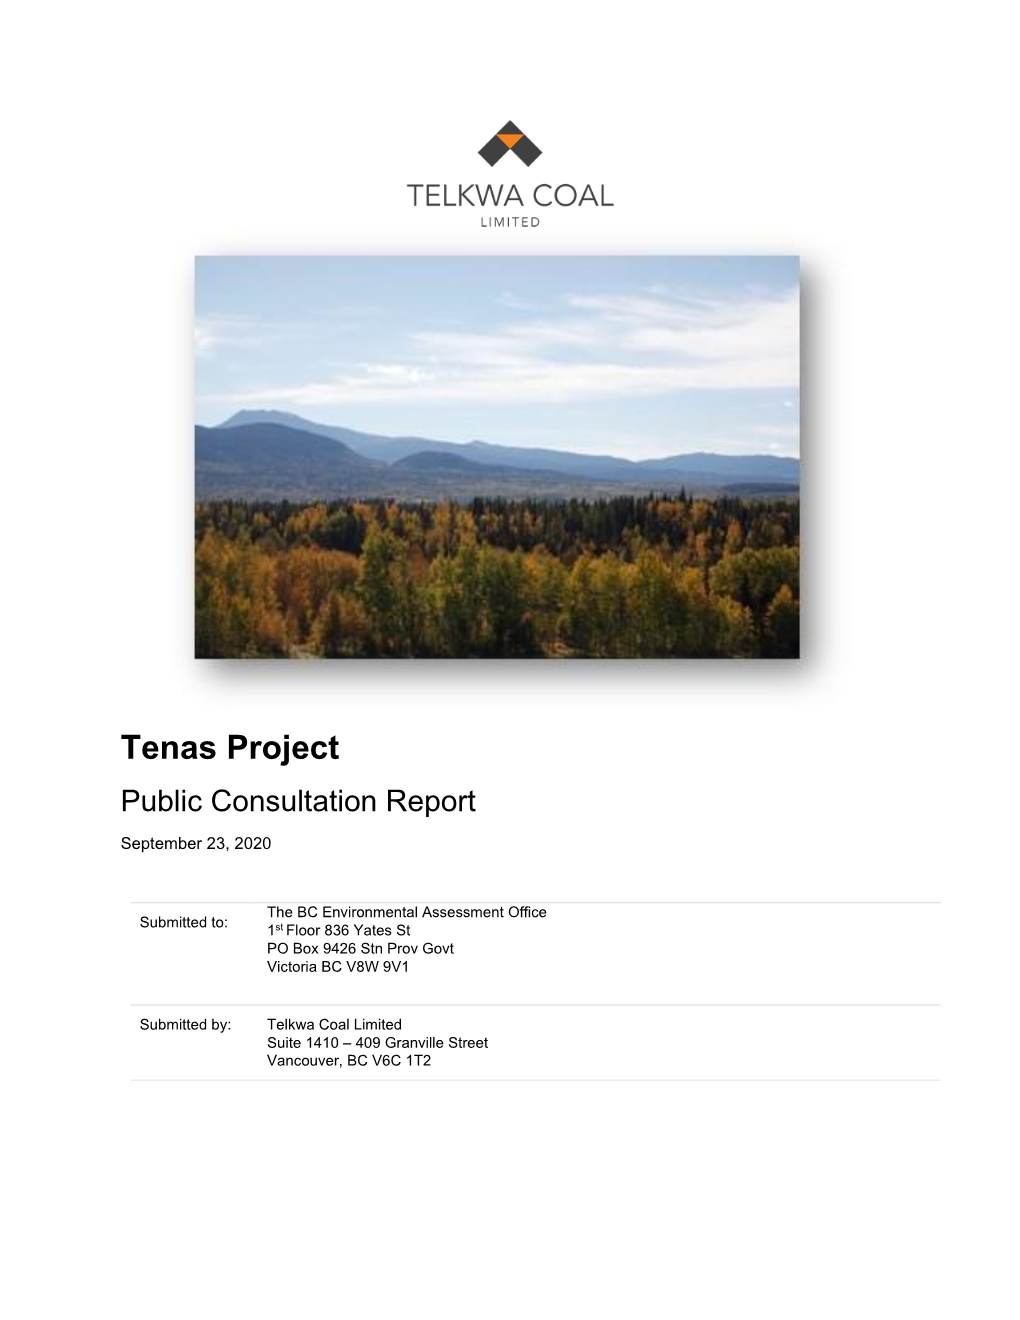 Tenas Project Public Consultation Report